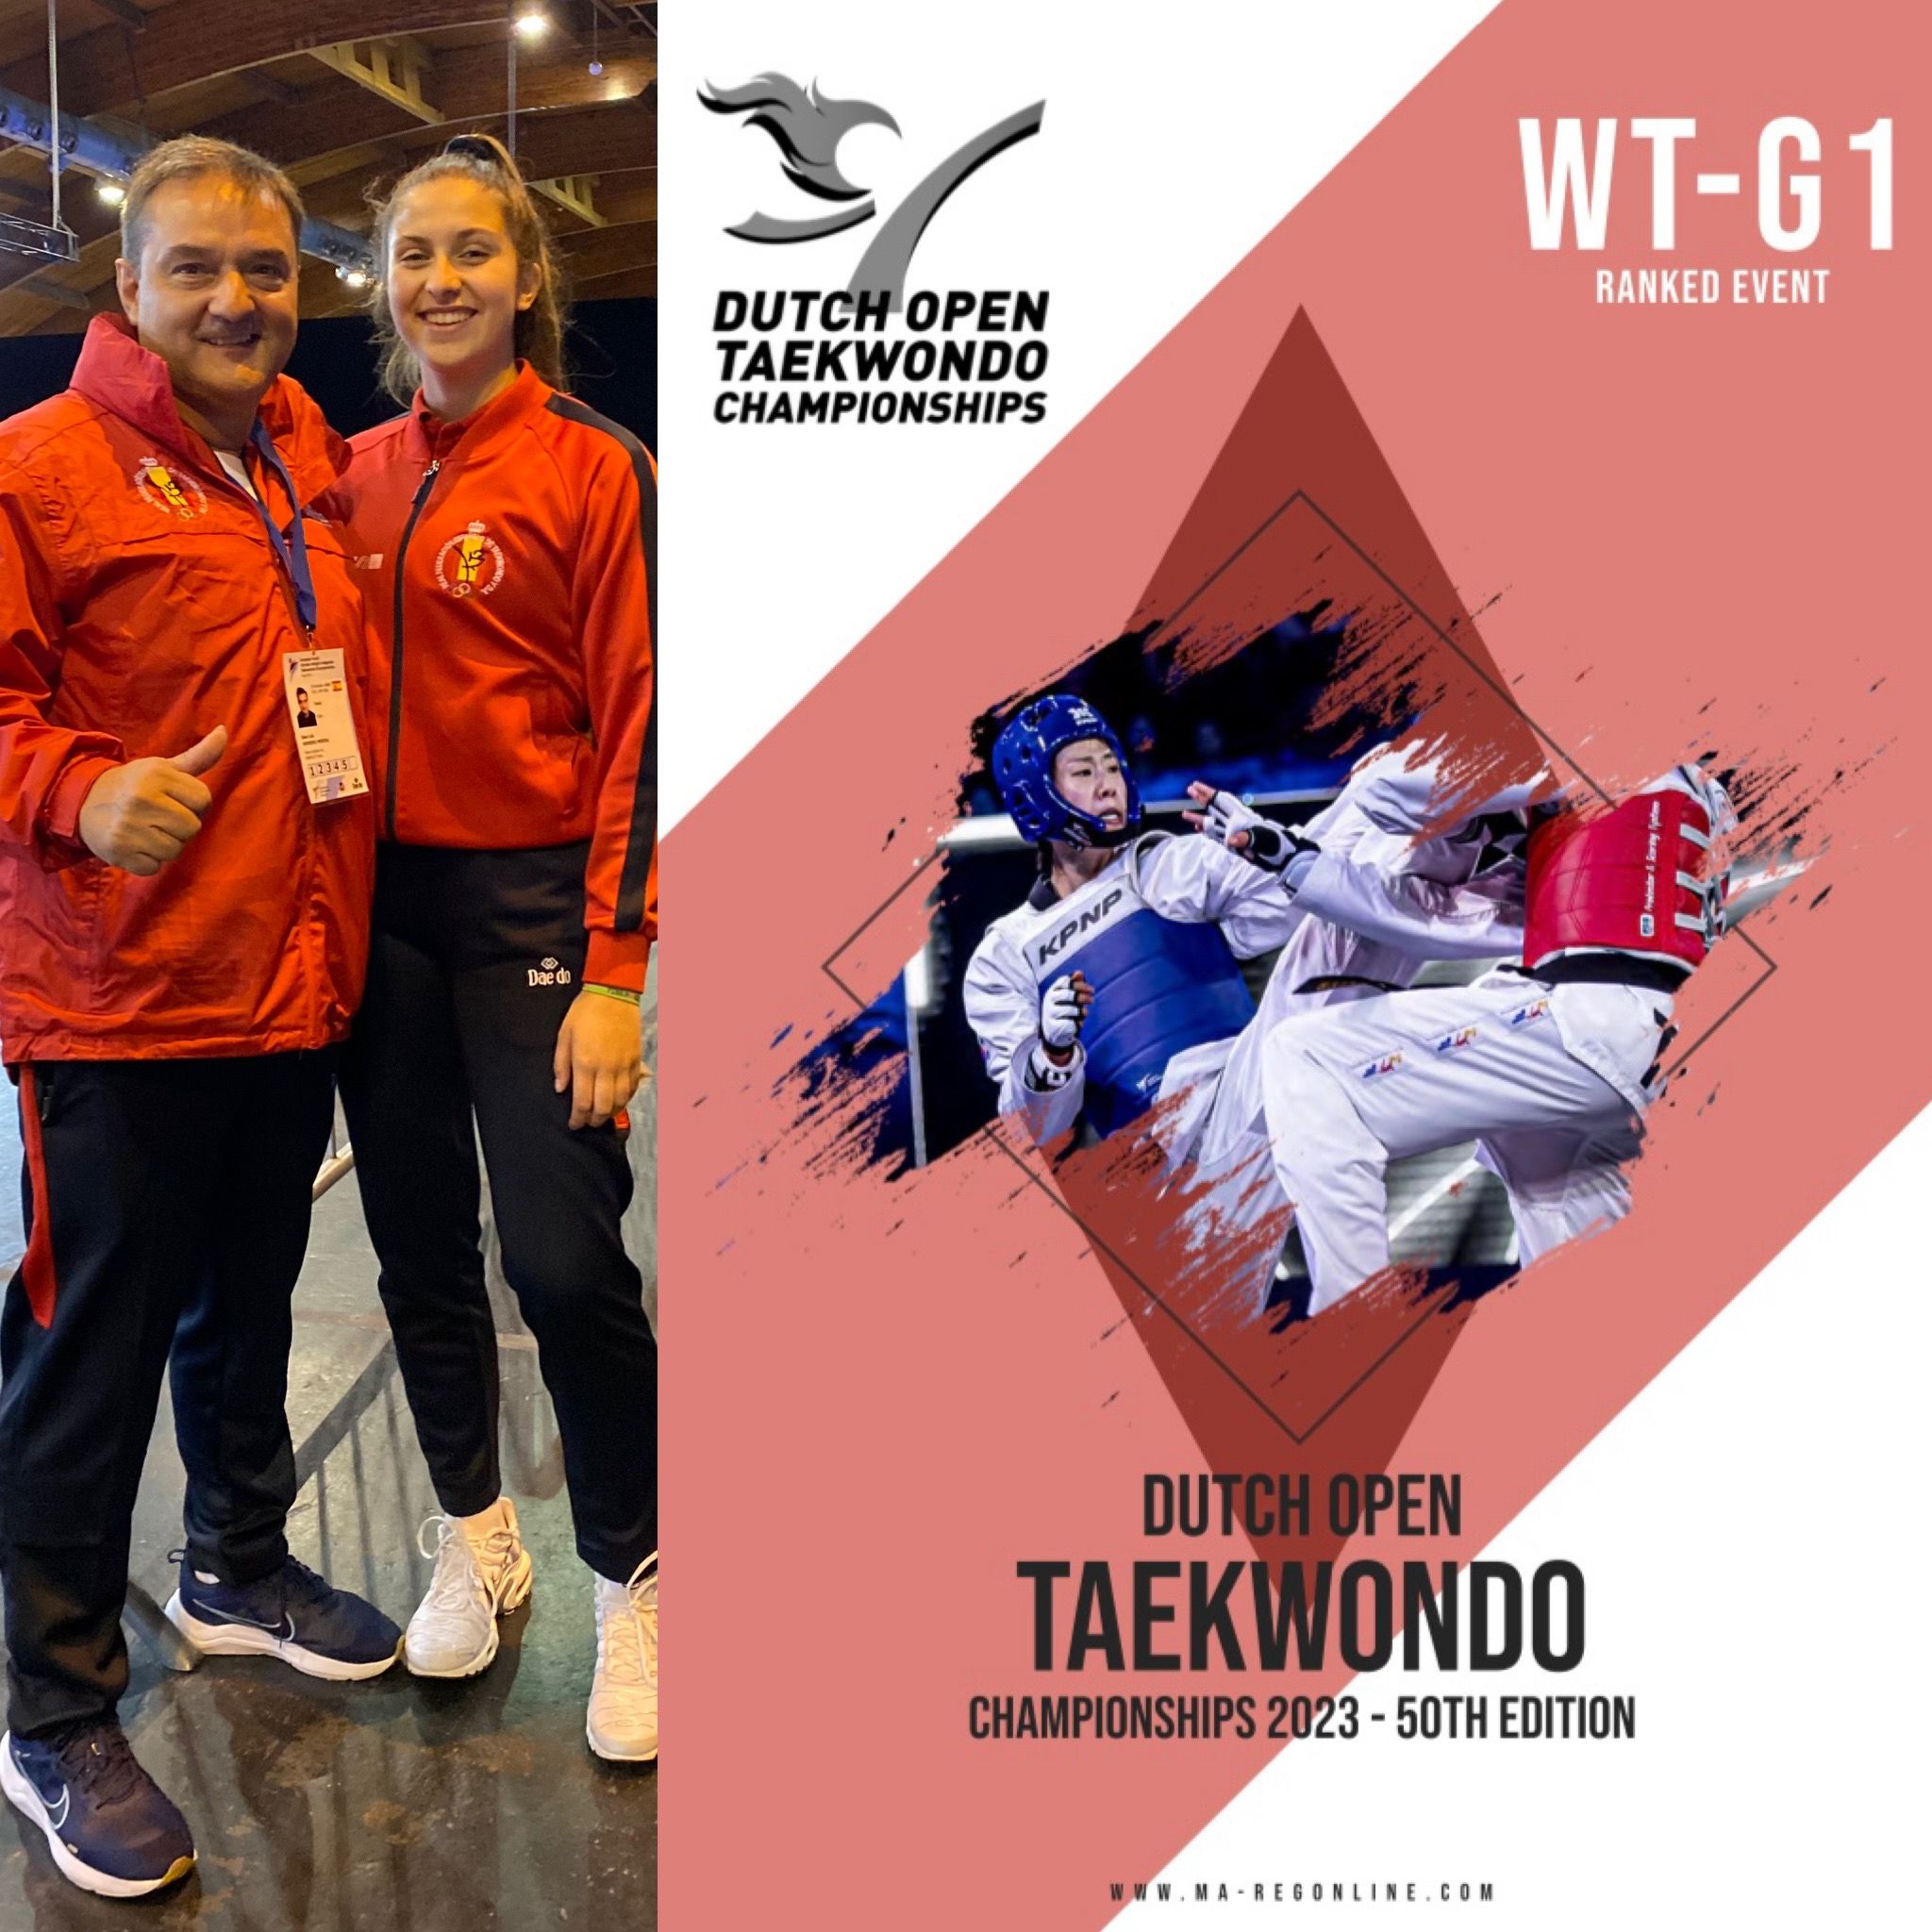 Inés de Benito  participará  en el  “Dutch Open Taekwondo Championships 2023”